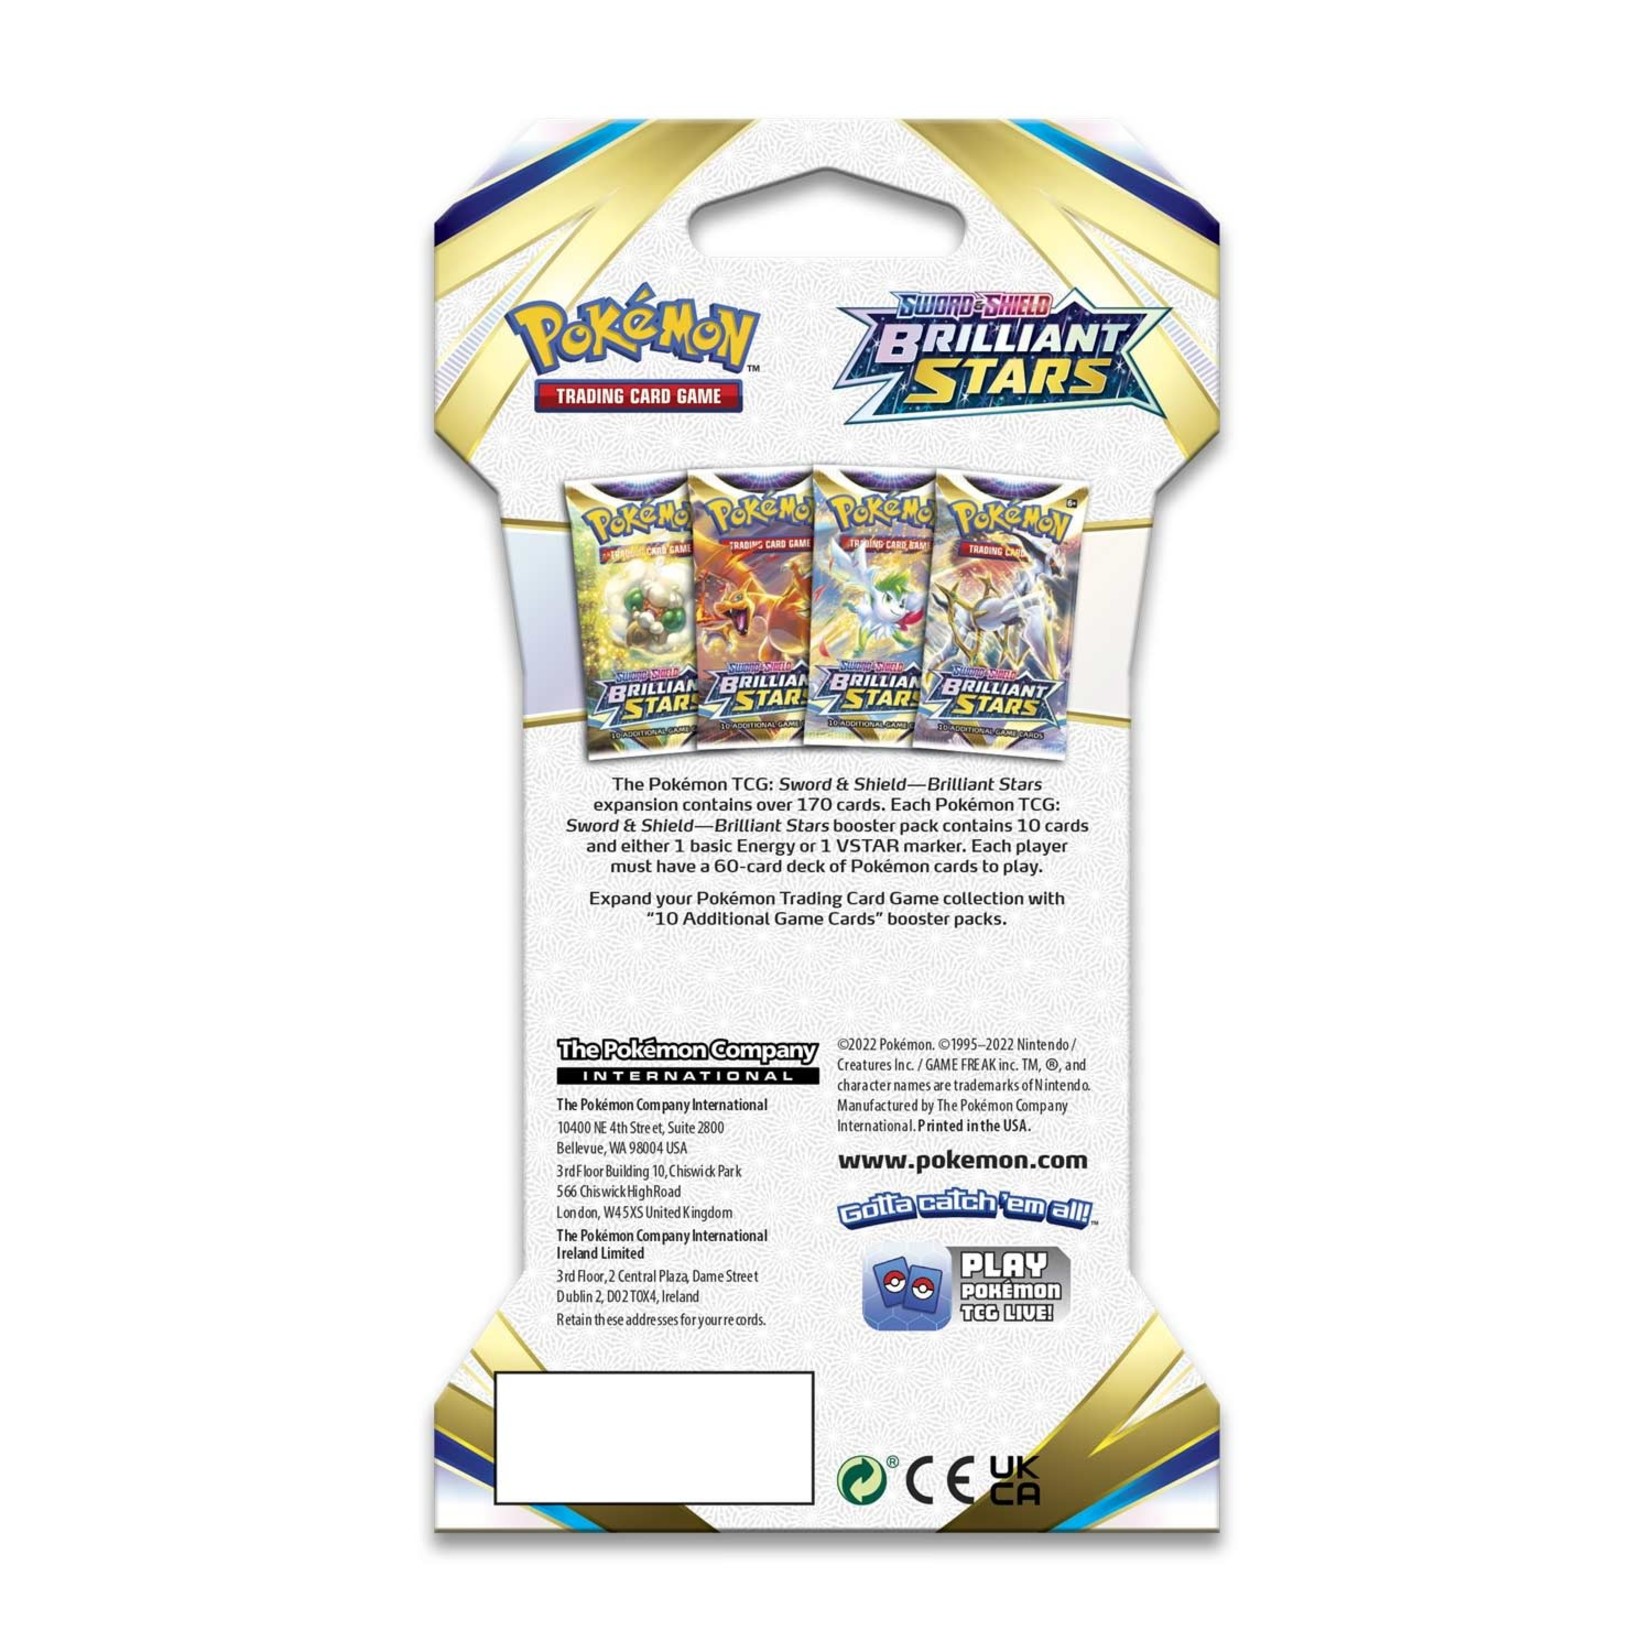 Pokémon Pokémon TCG: Brilliant Stars Sleeved Booster Pack (10 Cards)